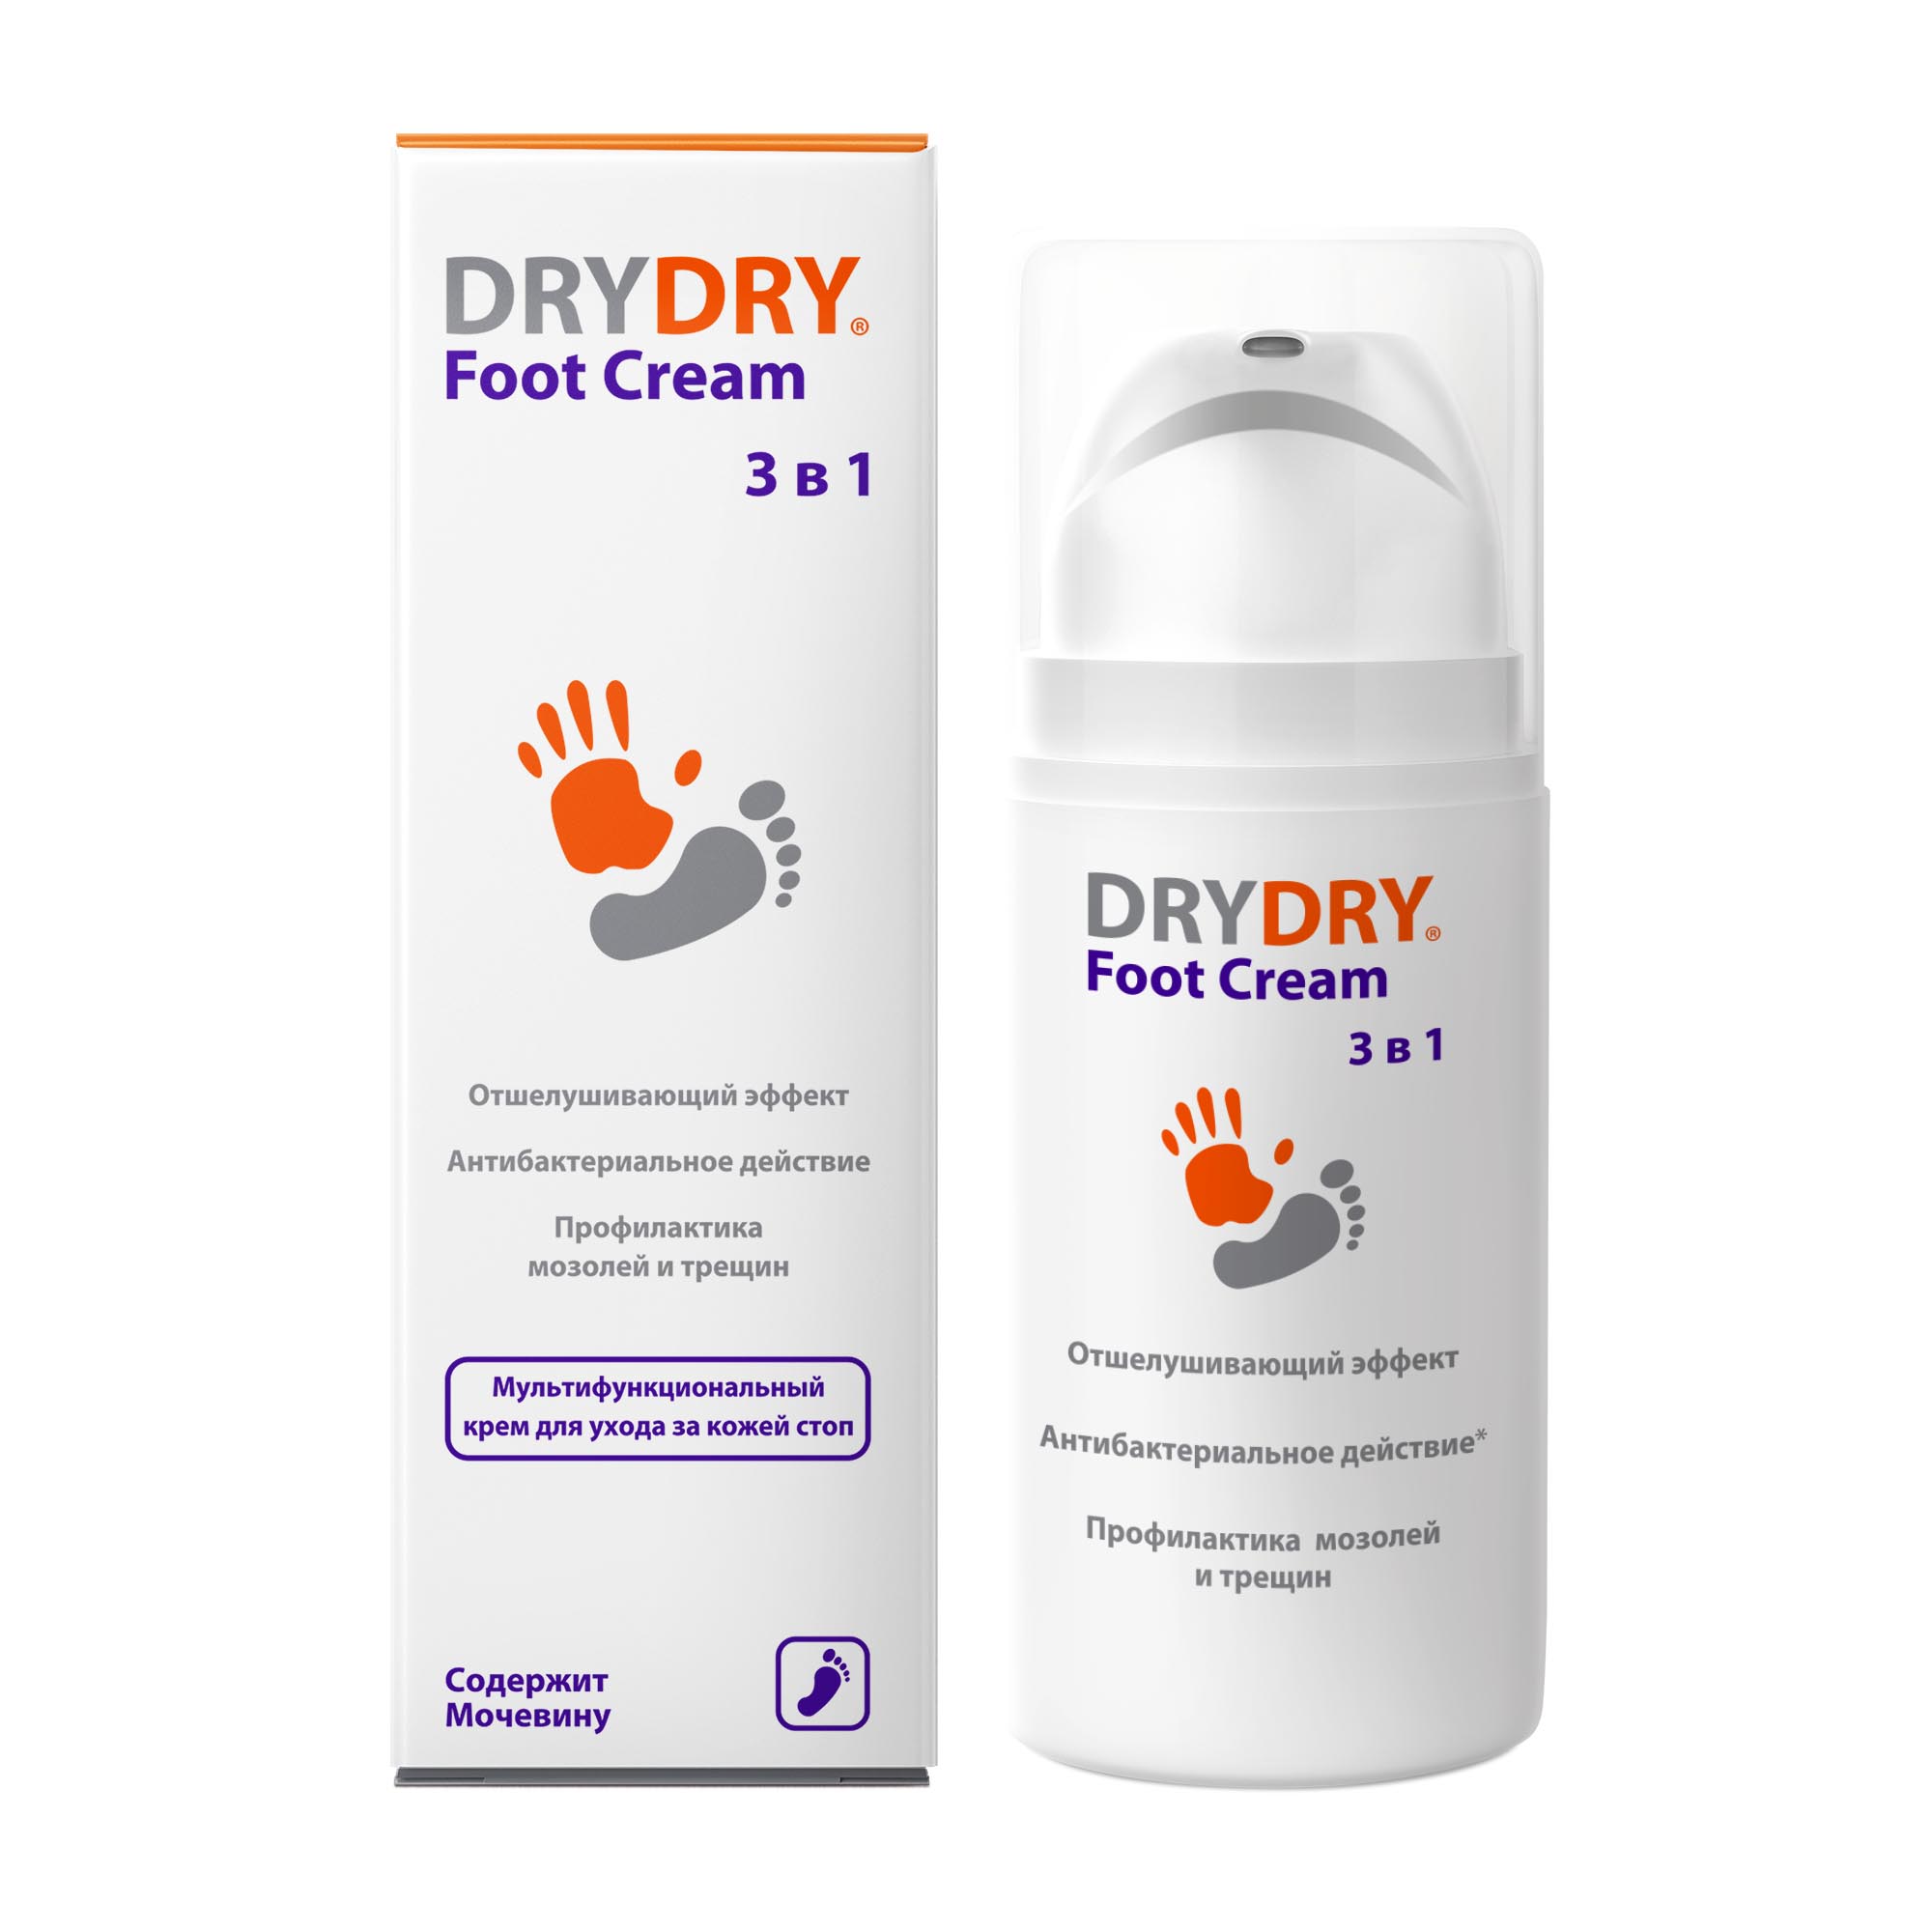 Dry dry foot. Драй драй для ног. Dry Dry крем. Аналог драй драй. Dry Dry для ног аналоги.